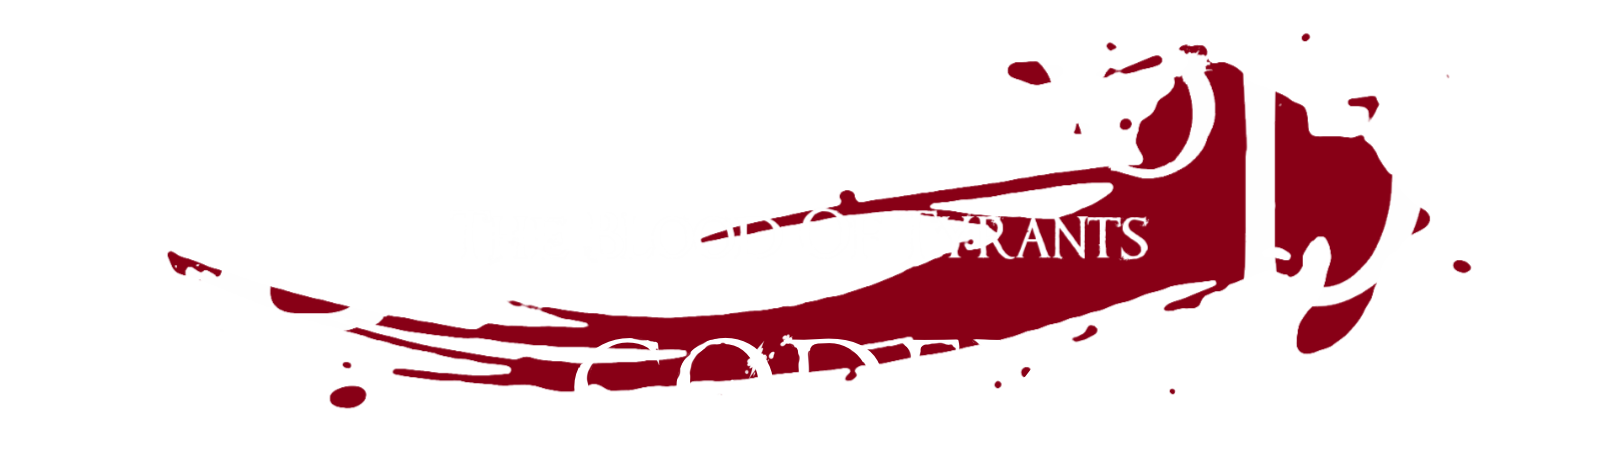 Brinkwood Codex